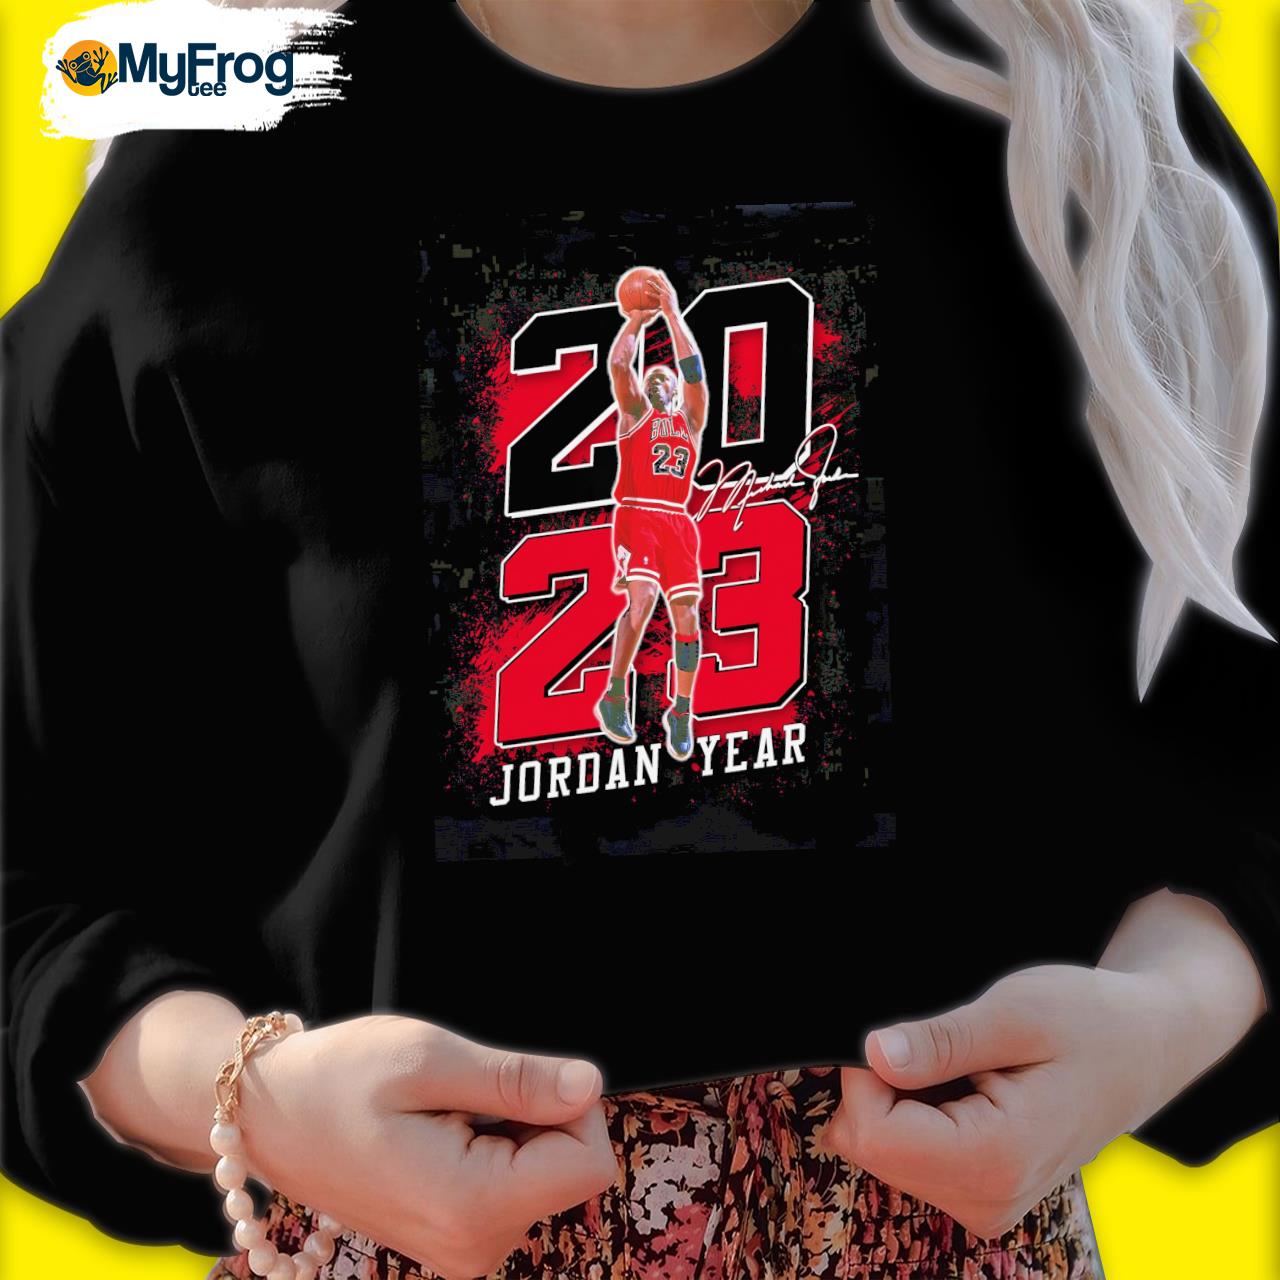 2023 Jordan year shirt, hoodie, sweater and long sleeve